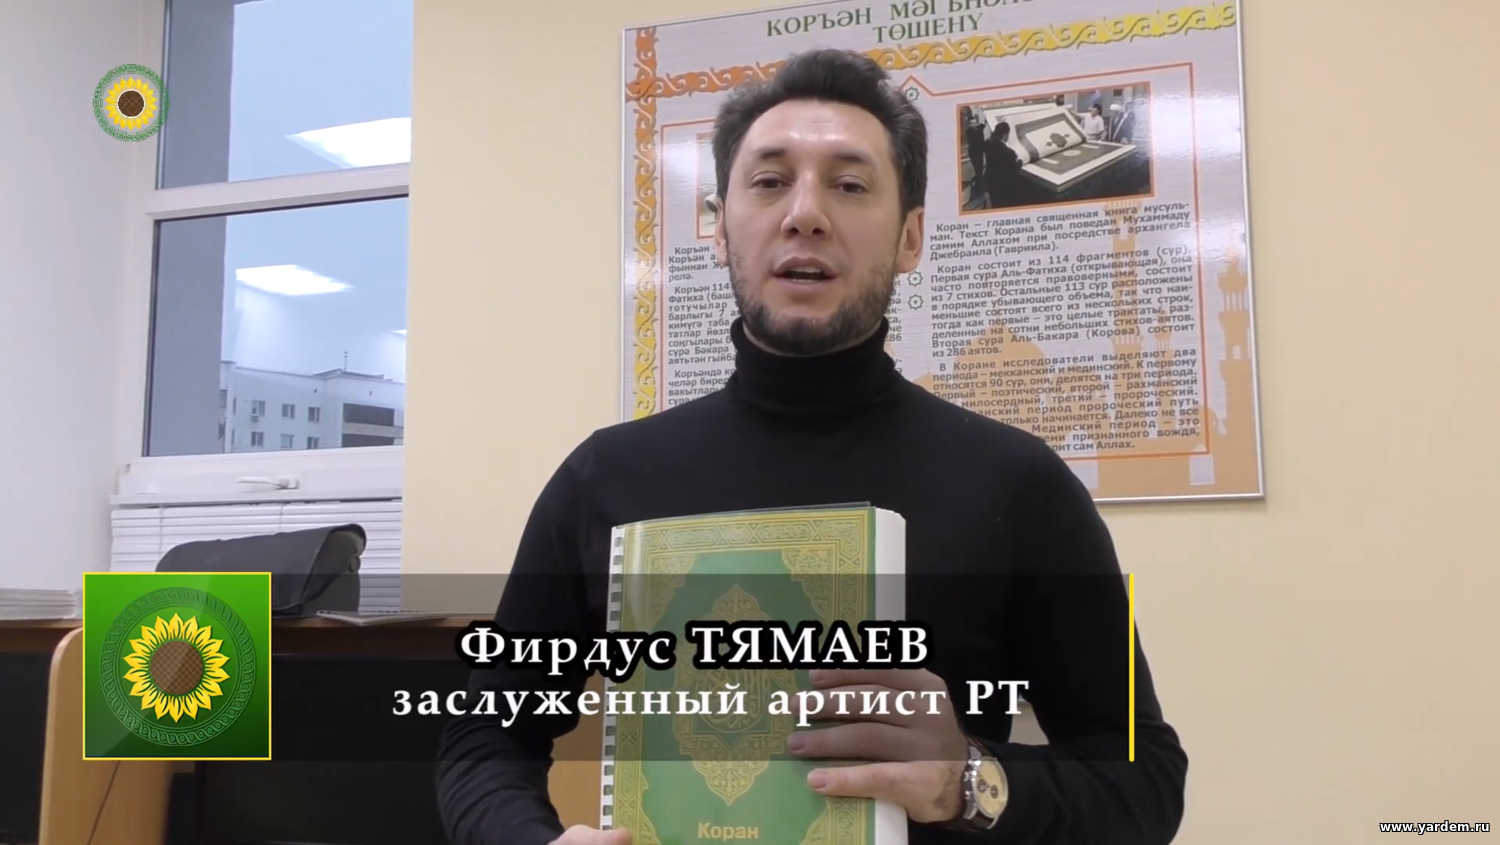 Фирдус Тямаев об акции фонда "Ярдэм" - «Кунел кузе белэн укыйм Коръэн» («Читаю Коран душой»)